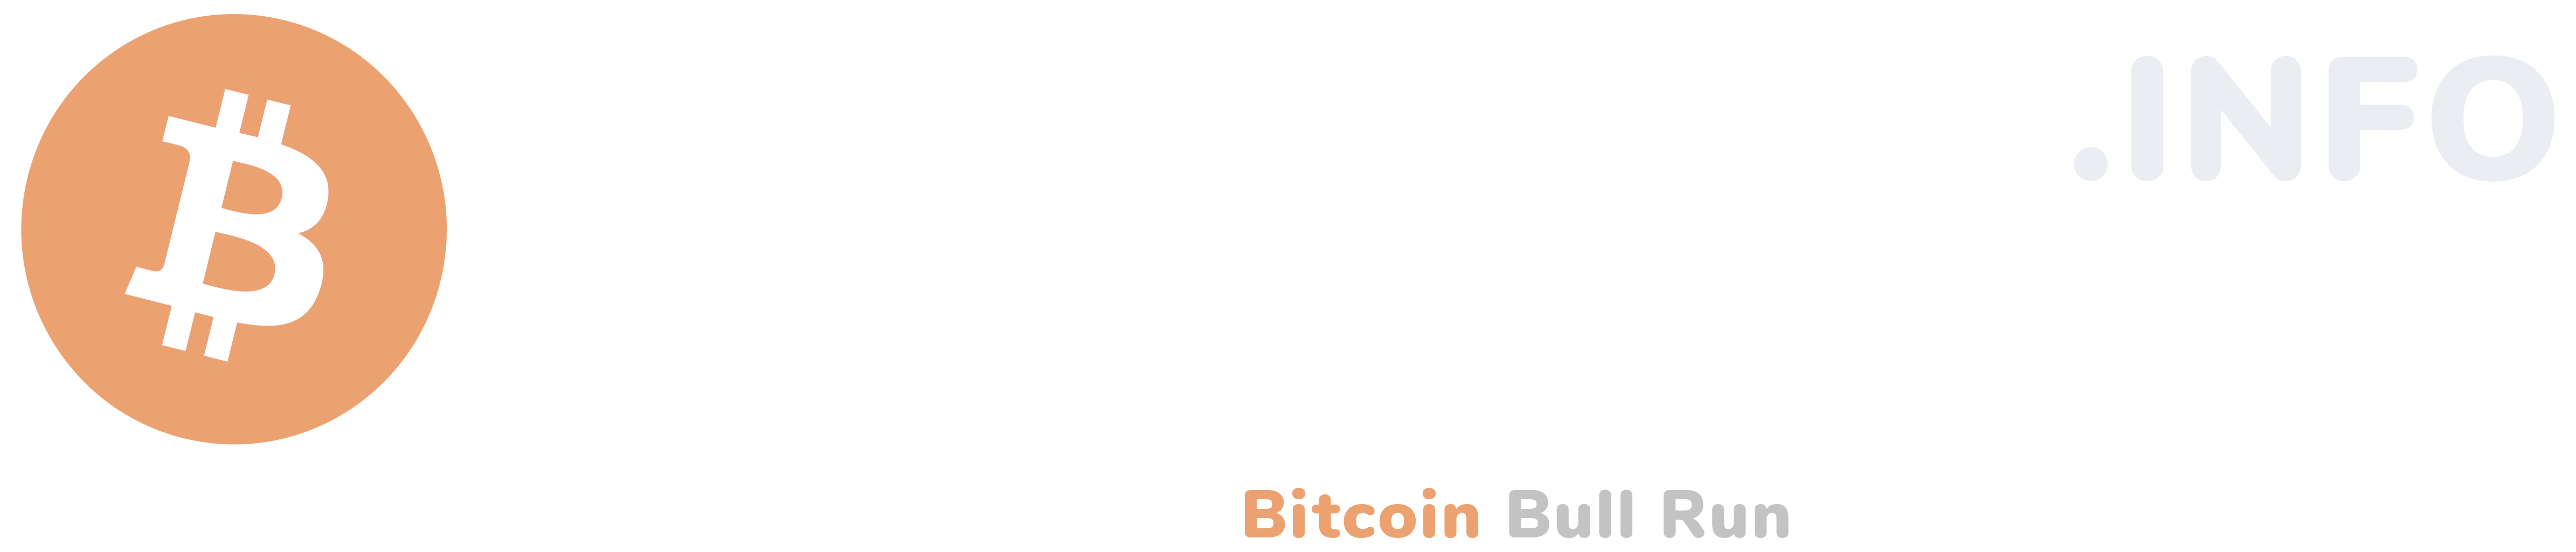 CBBI logo